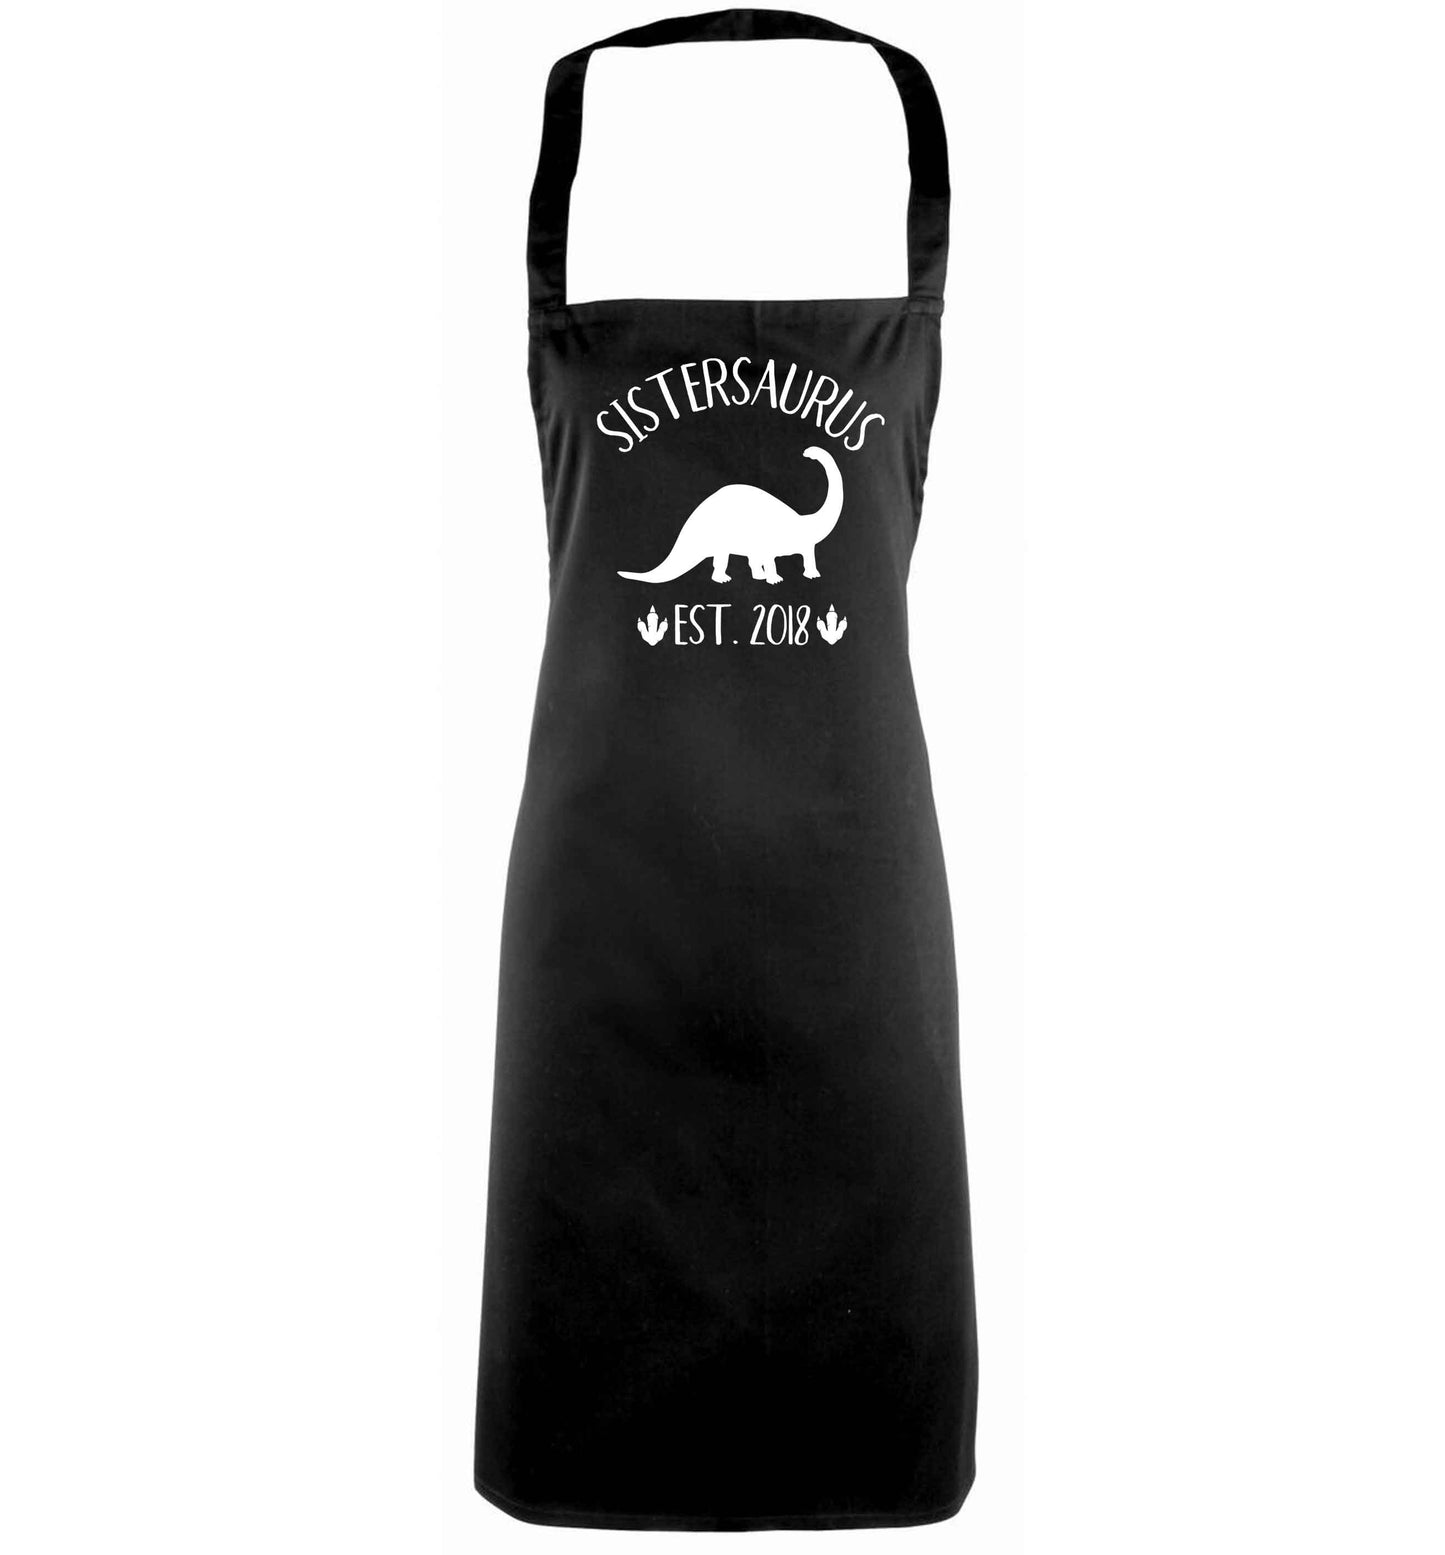 Personalised sistersaurus since (custom date) black apron